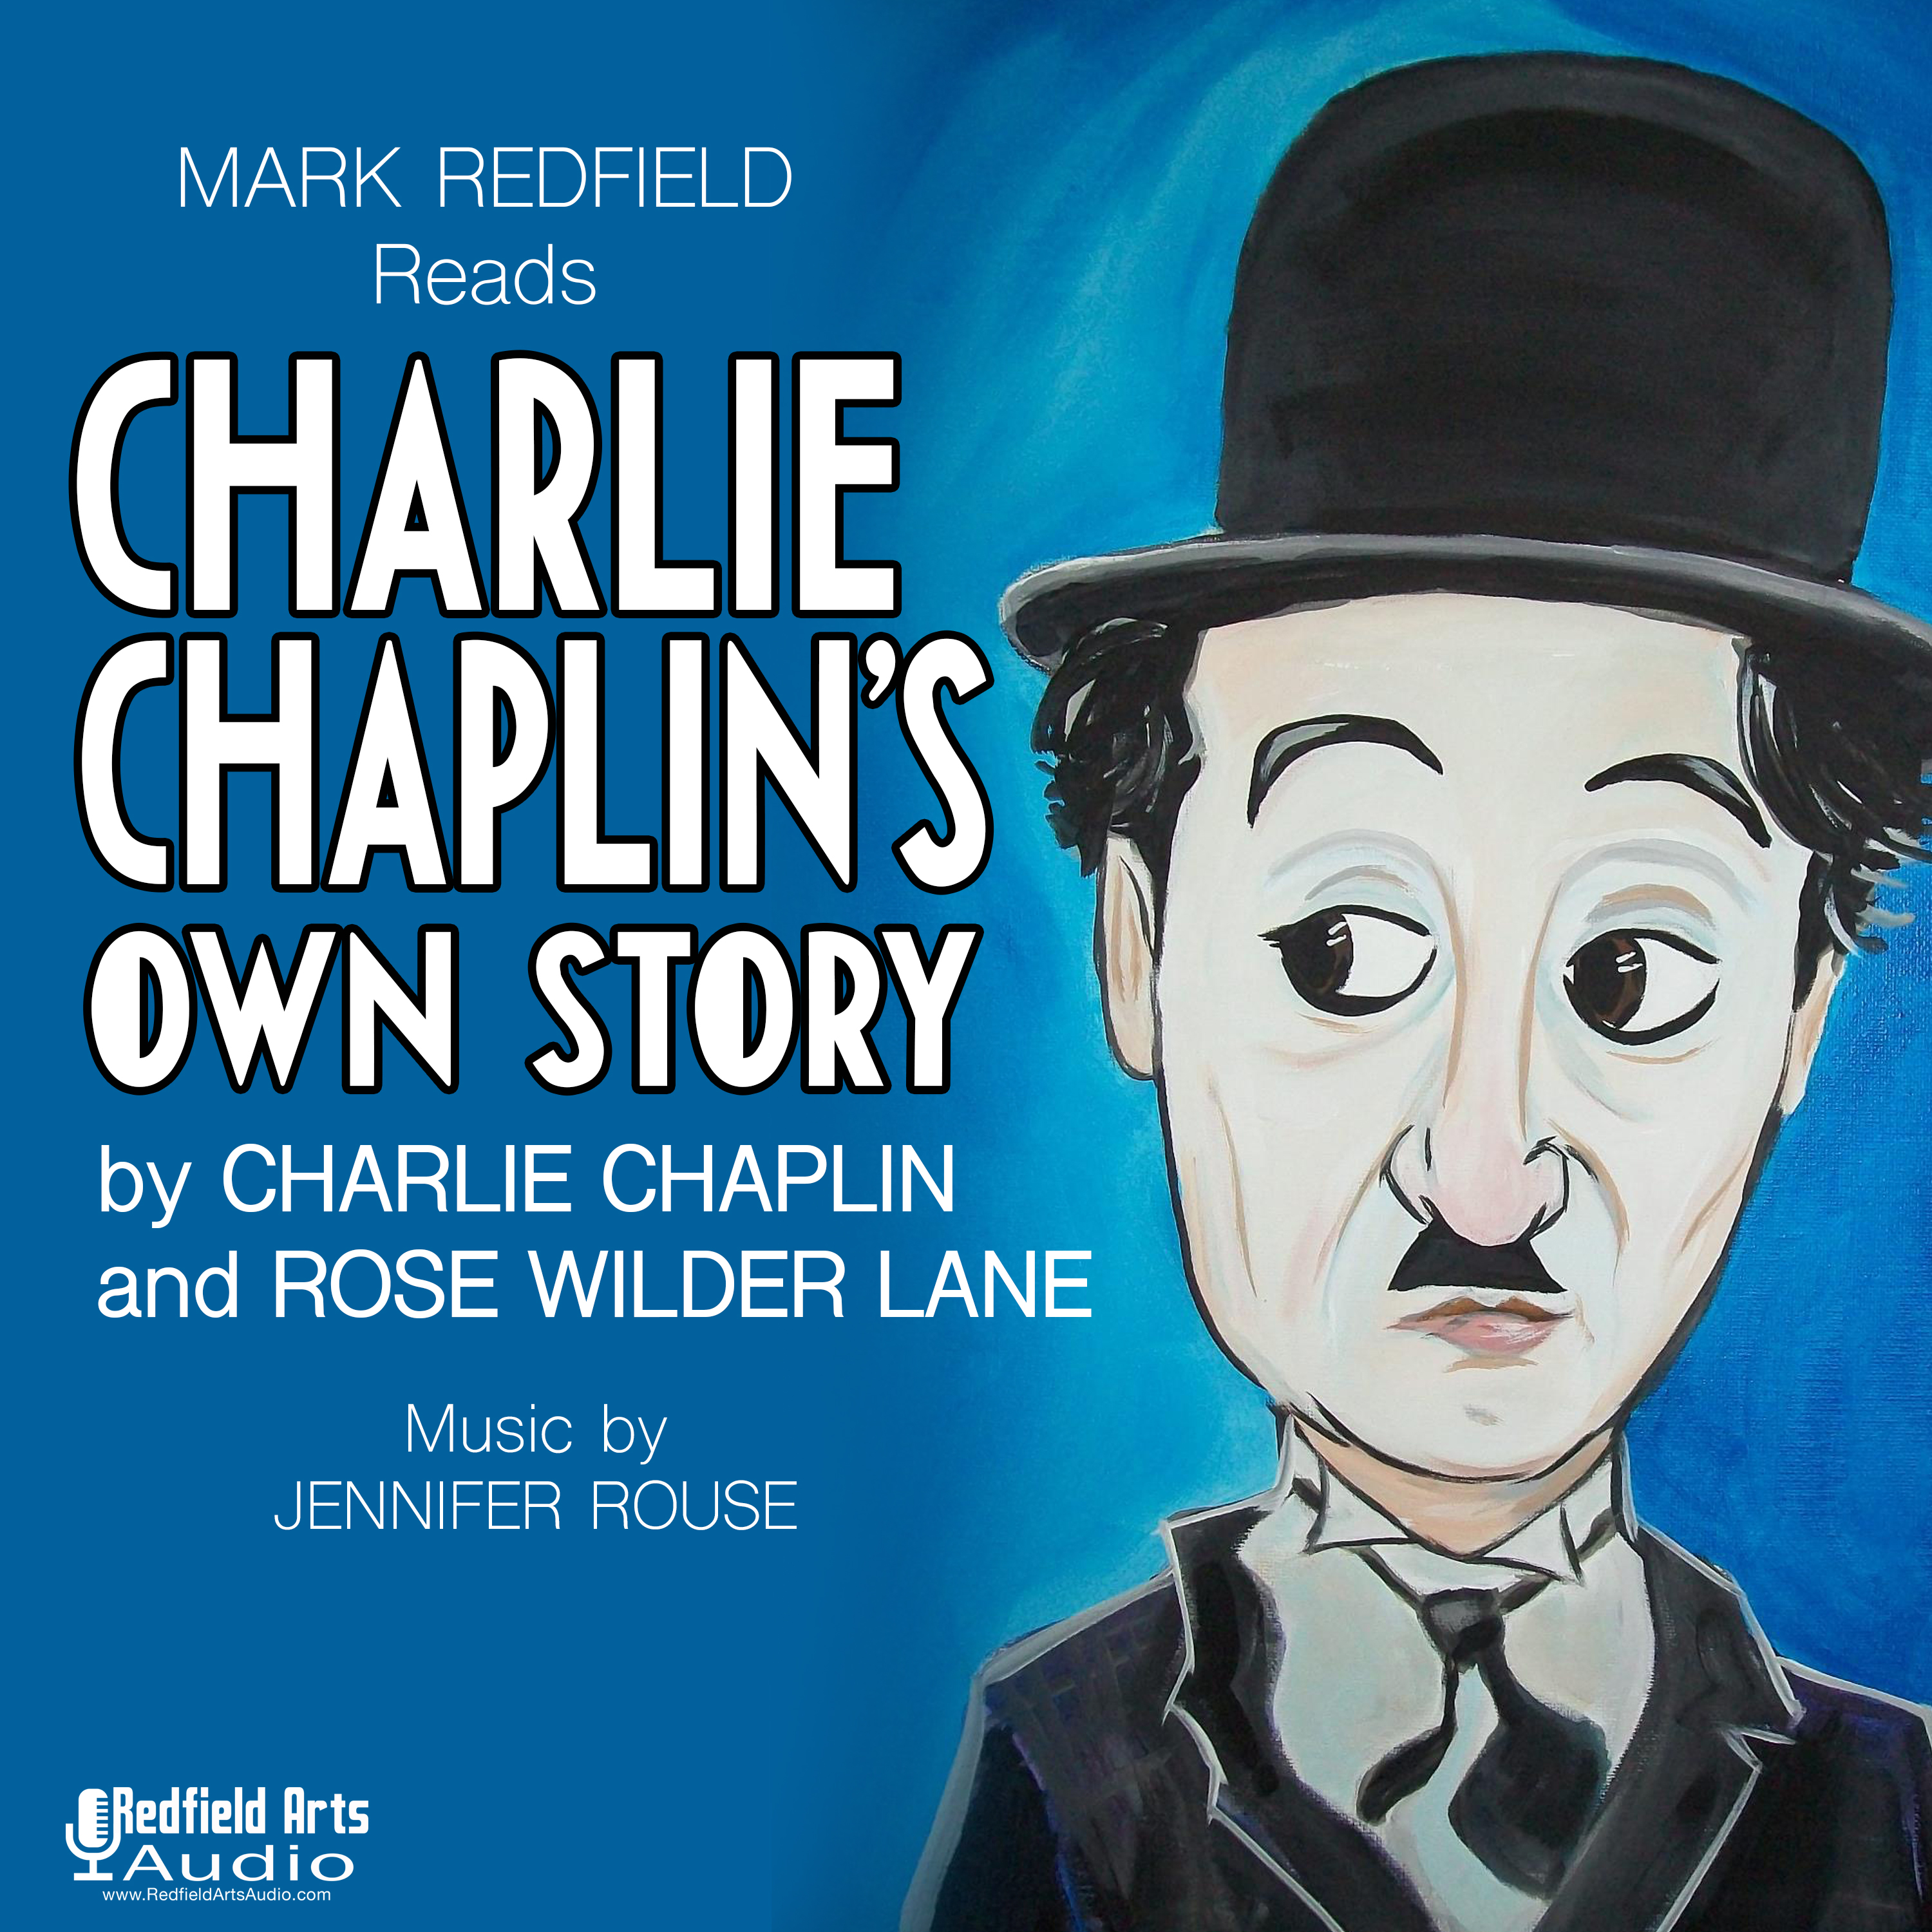 Charlie Chaplin's own story